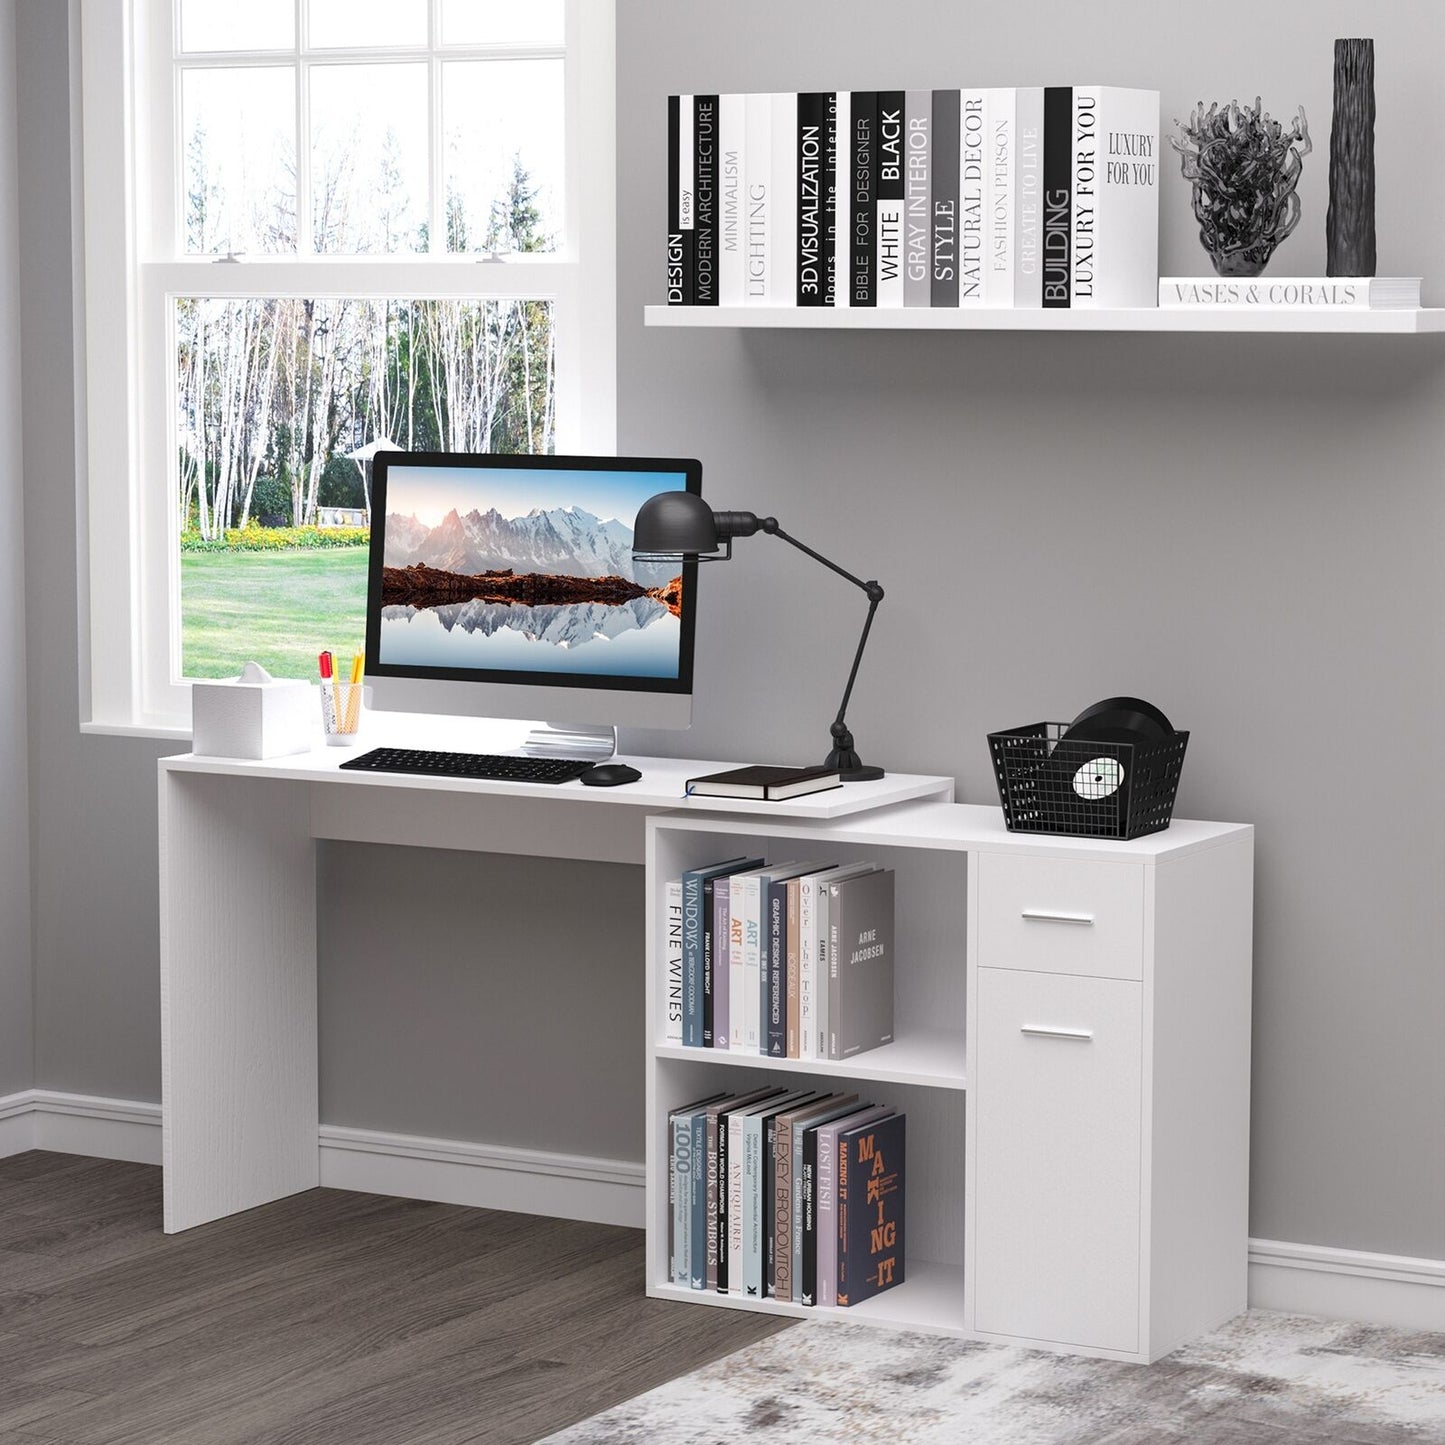 L Shaped Desk - 15.75 Inc L Desk Shape with Adjustable Swivel Features